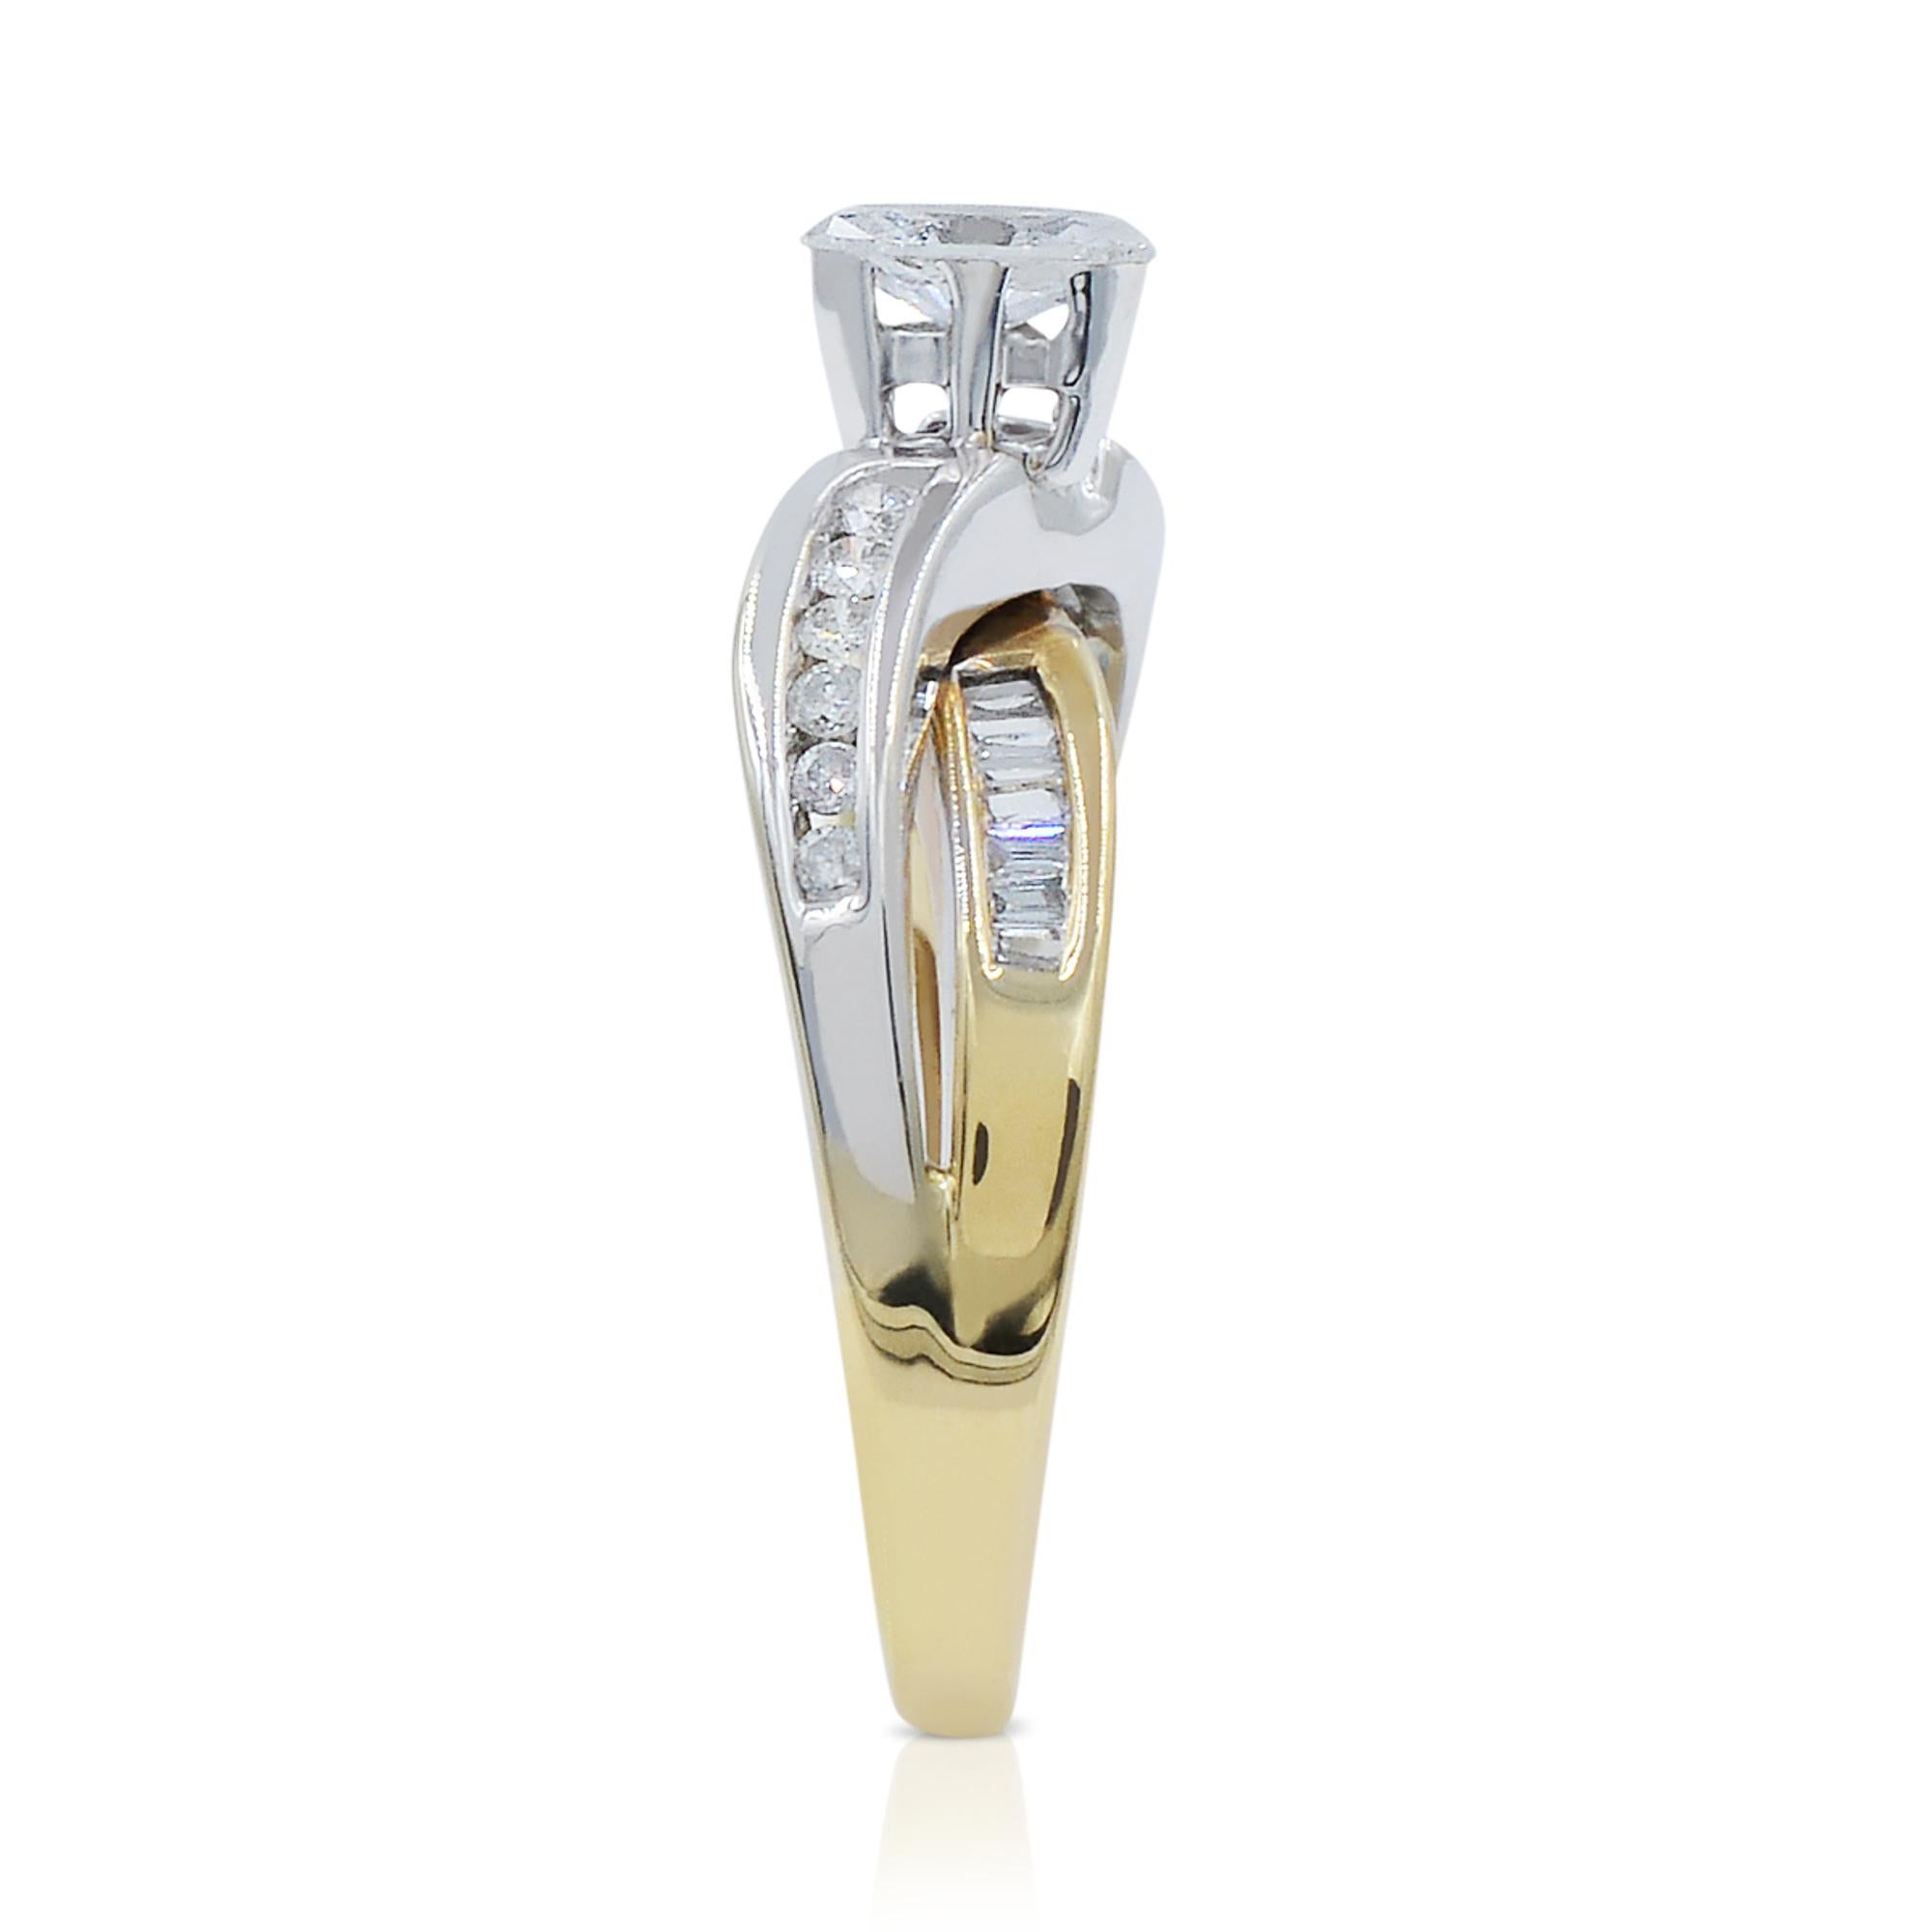 Rachel Koen Marquise Cut Diamond Engagement Ring Set 14K Yellow Gold 1.05Cttw For Sale 2